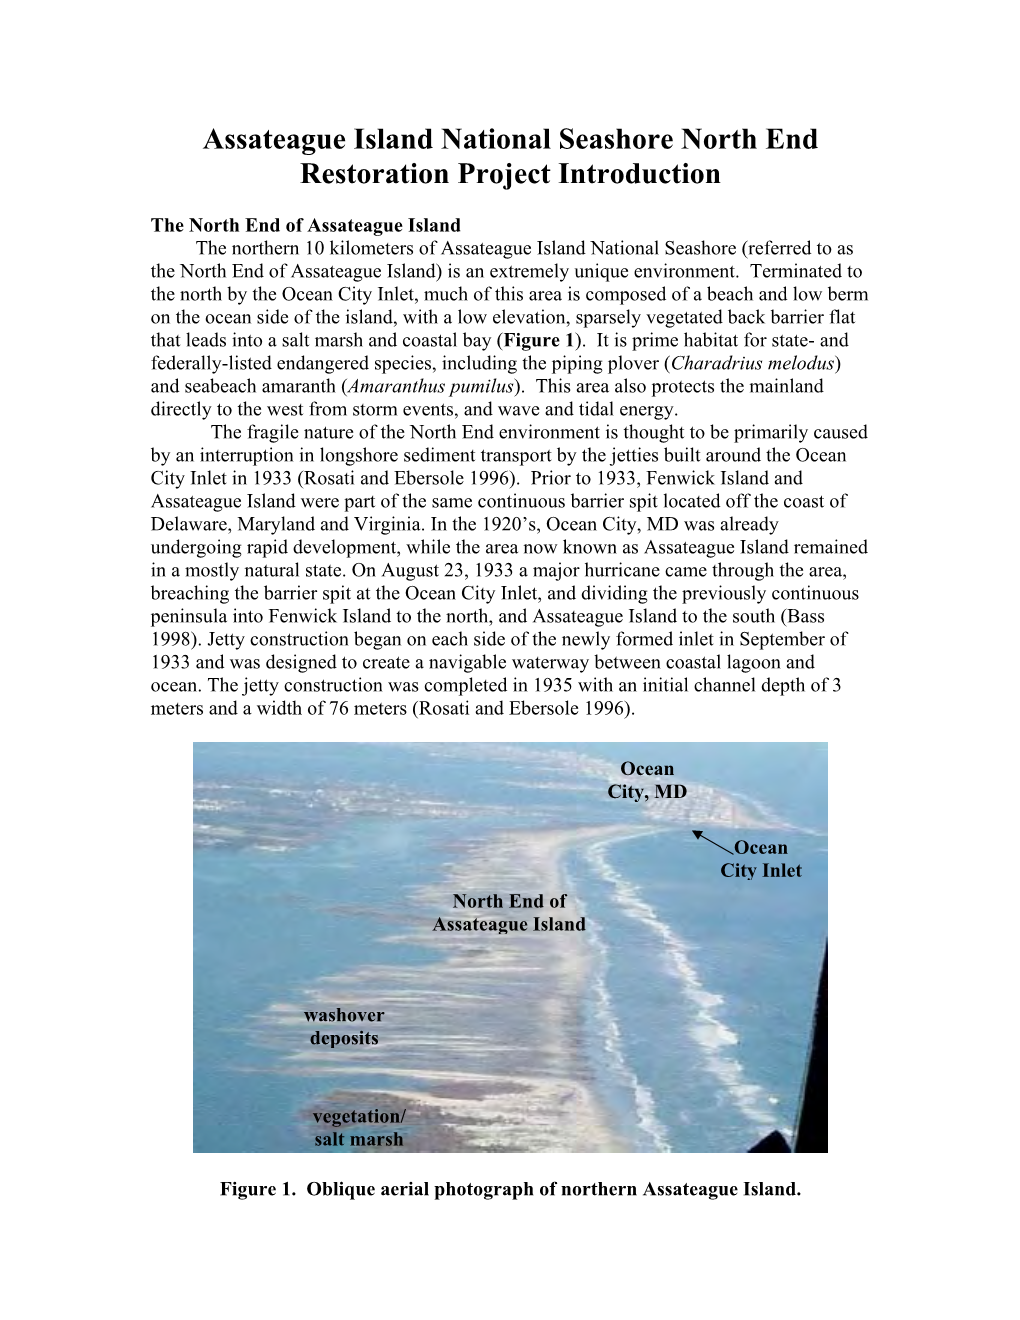 Assateague Island National Seashore North End Restoration Project Introduction